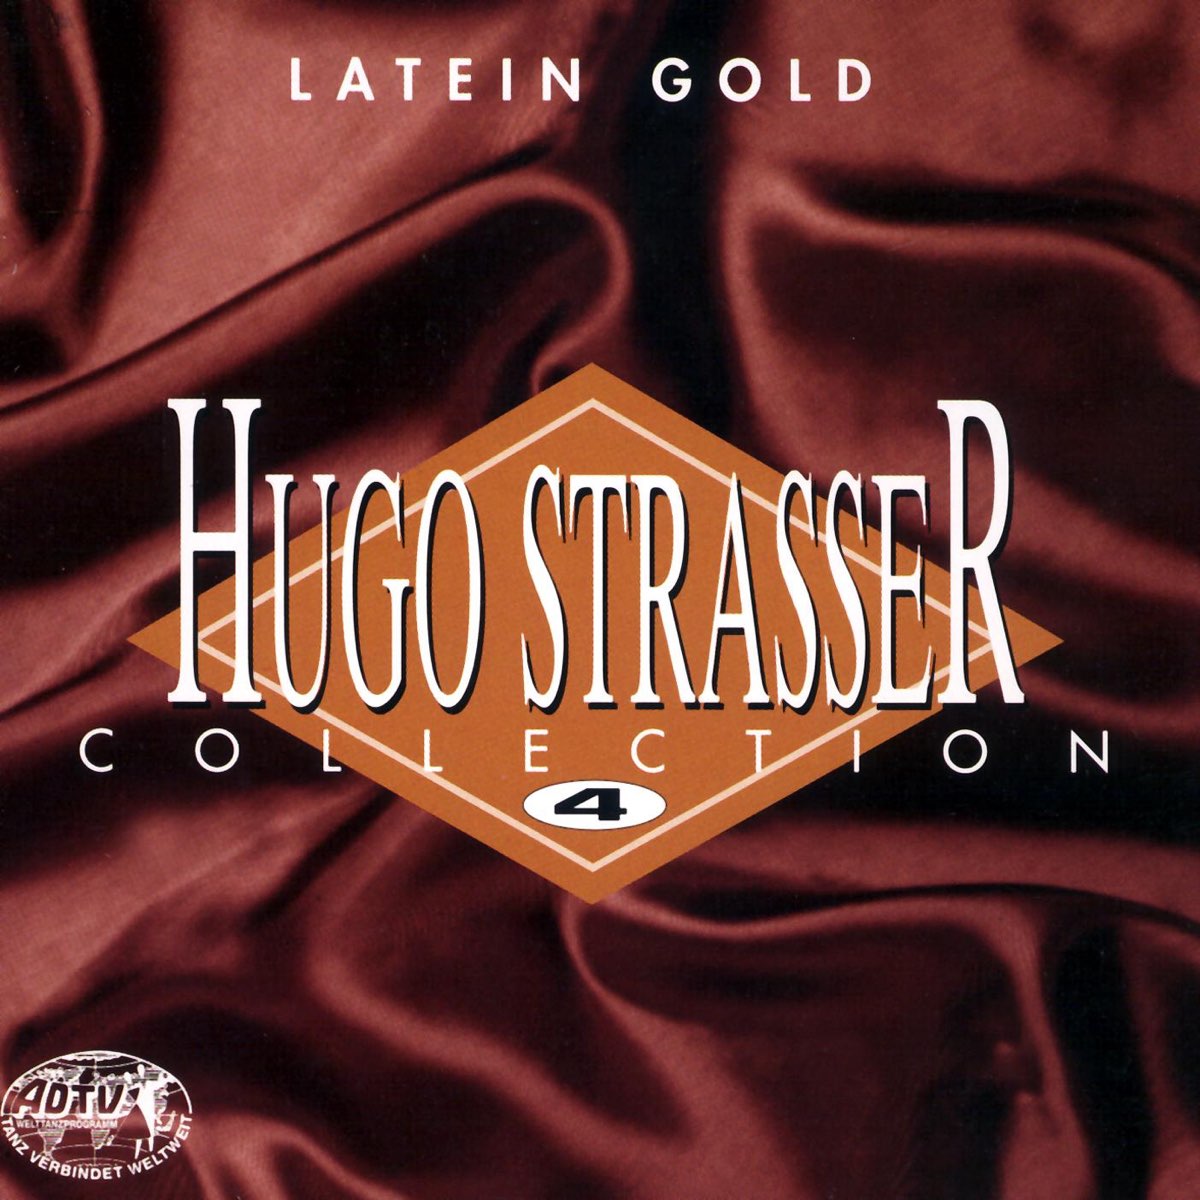 Hugo strasser. Hugo Strasser Gold collection. Hugo Strasser Gold collection 1983. Latein. Hugo Strasser - Hey Mambo.